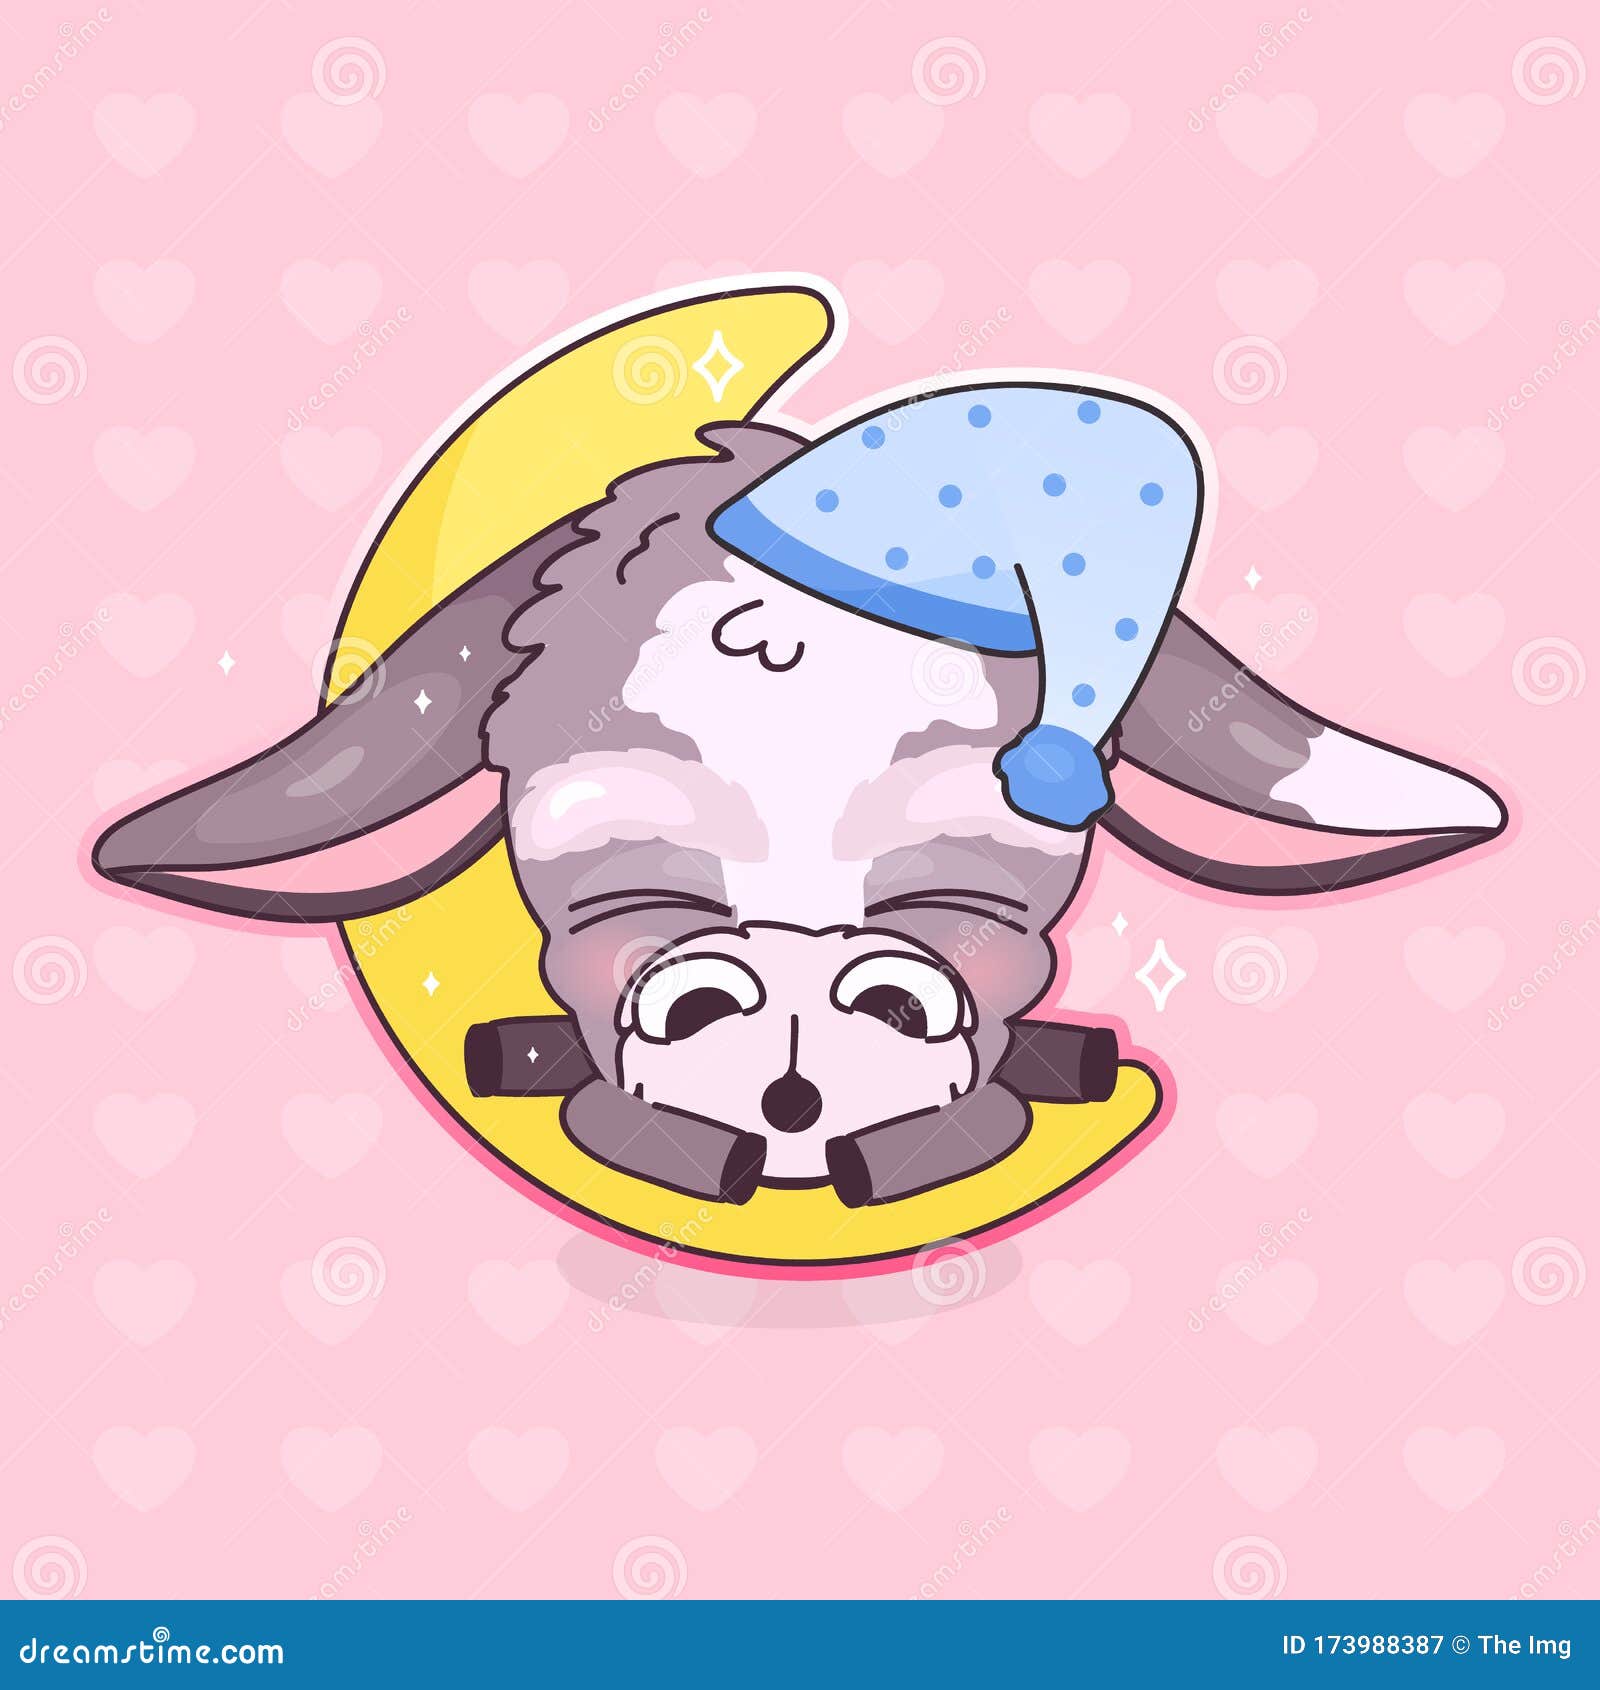 cute sleeping donkey kawaii cartoon  character. adorable and funny sleeping animal in night cap  sticker, patch.